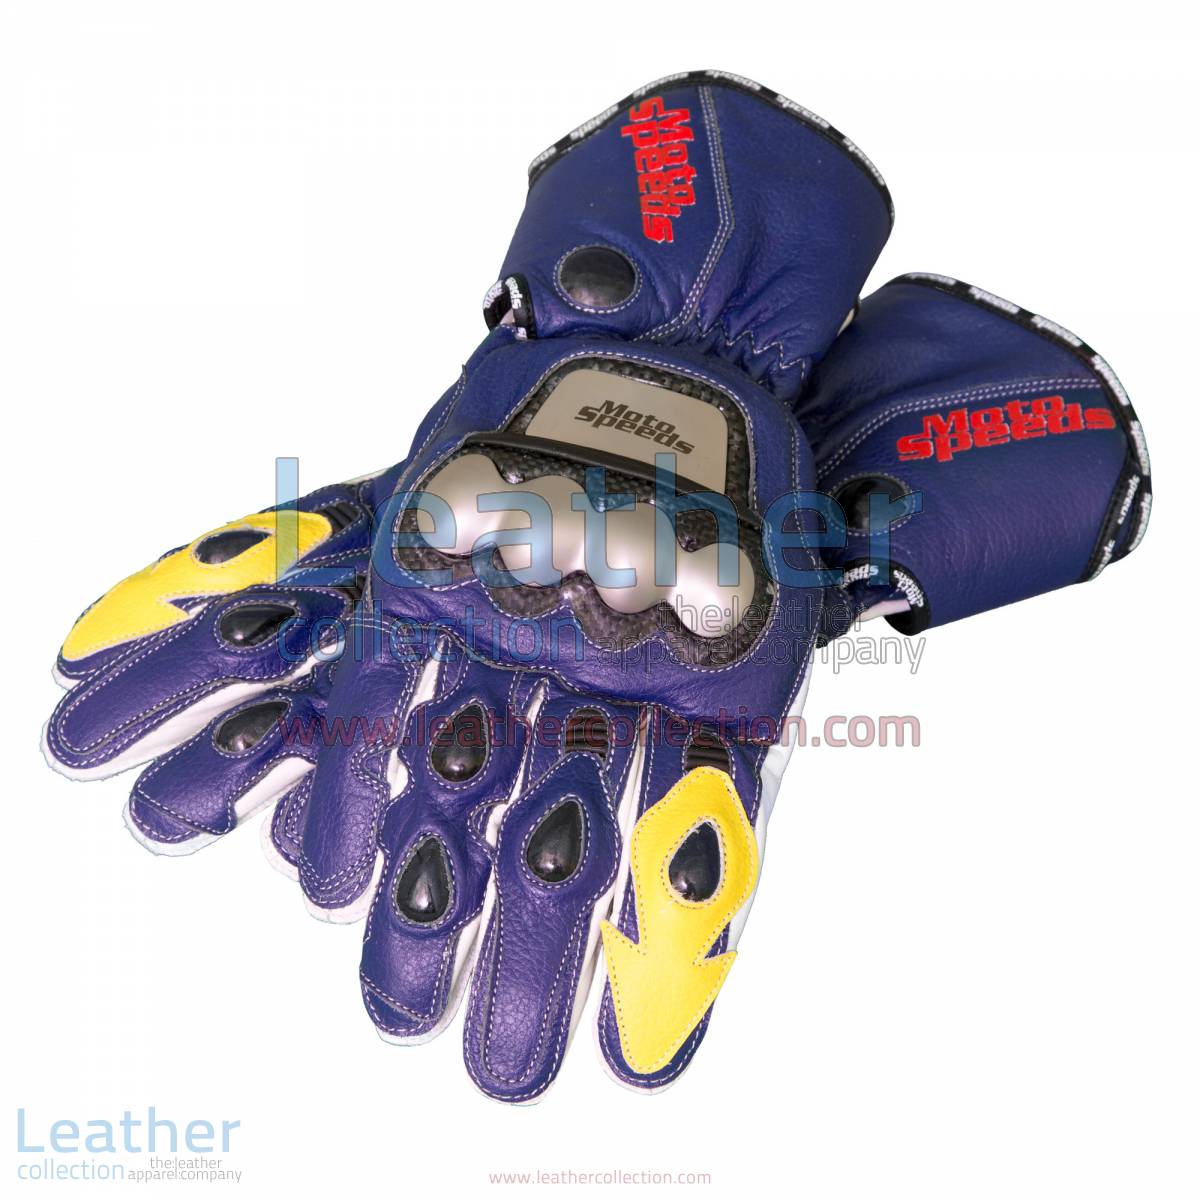 Chris Vermeulen Rizla Suzuki Race Gloves | Chris Vermeulen Rizla Suzuki Race Gloves